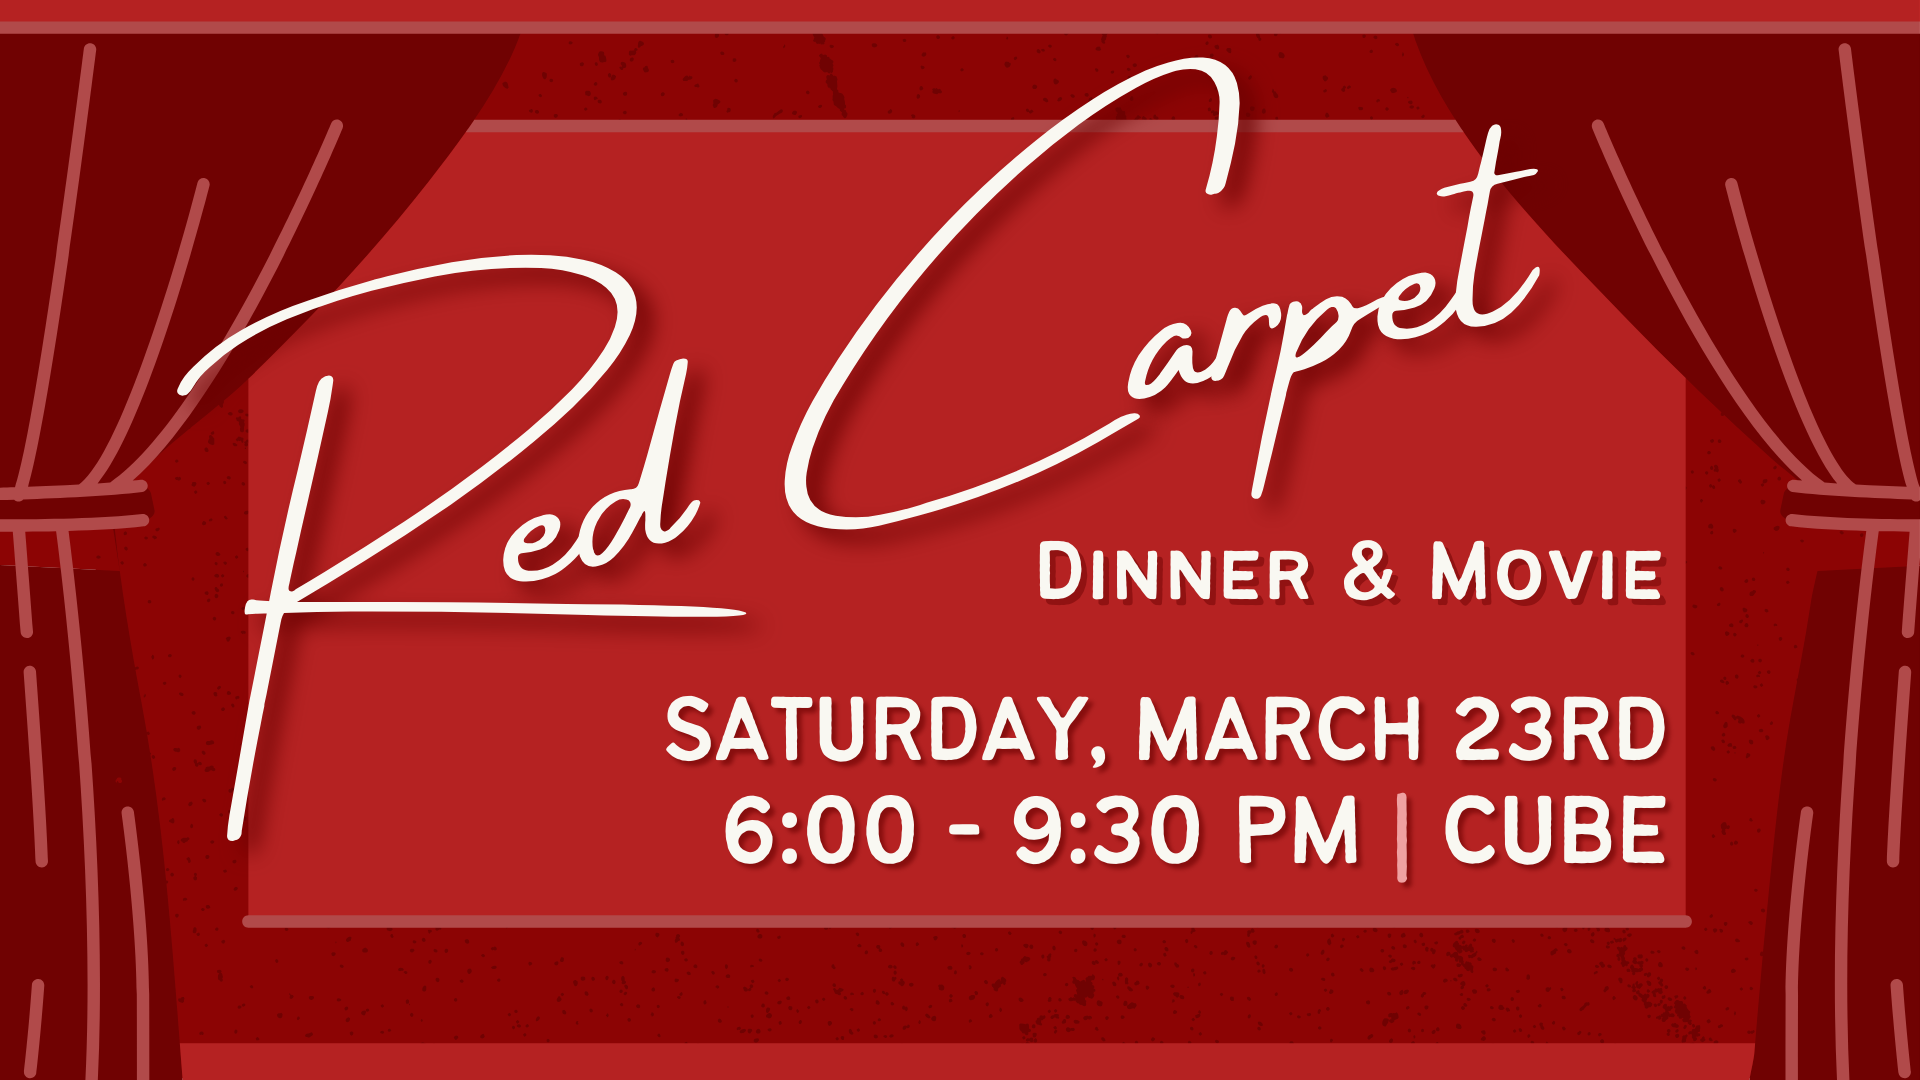 Red Carpet Dinner & Movie